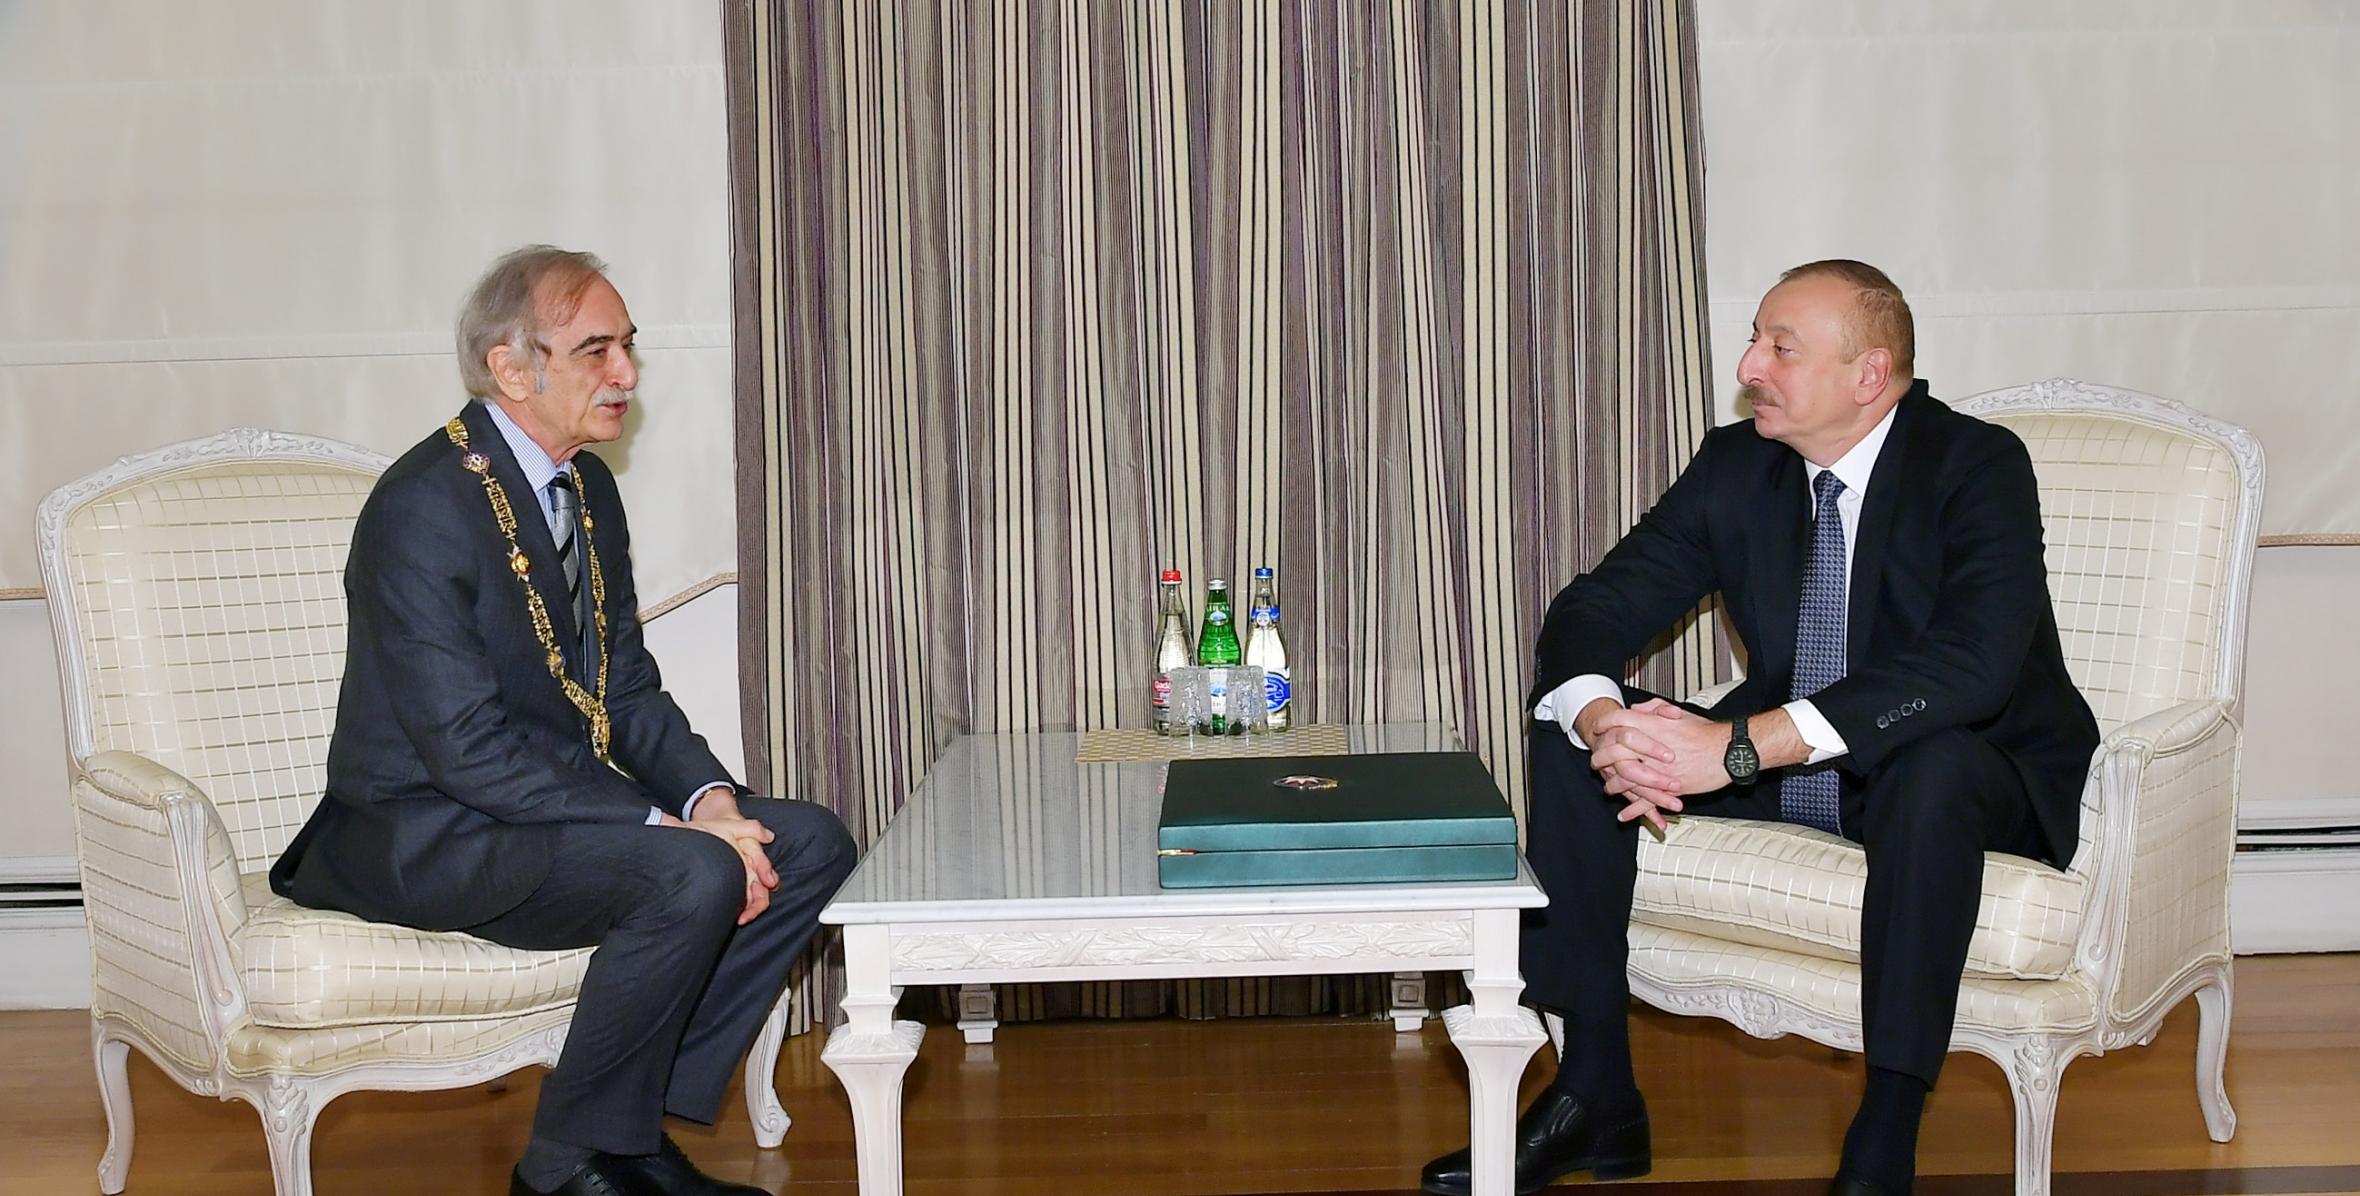 Ilham Aliyev presented “Heydar Aliyev” Order to Polad Bulbuloghlu